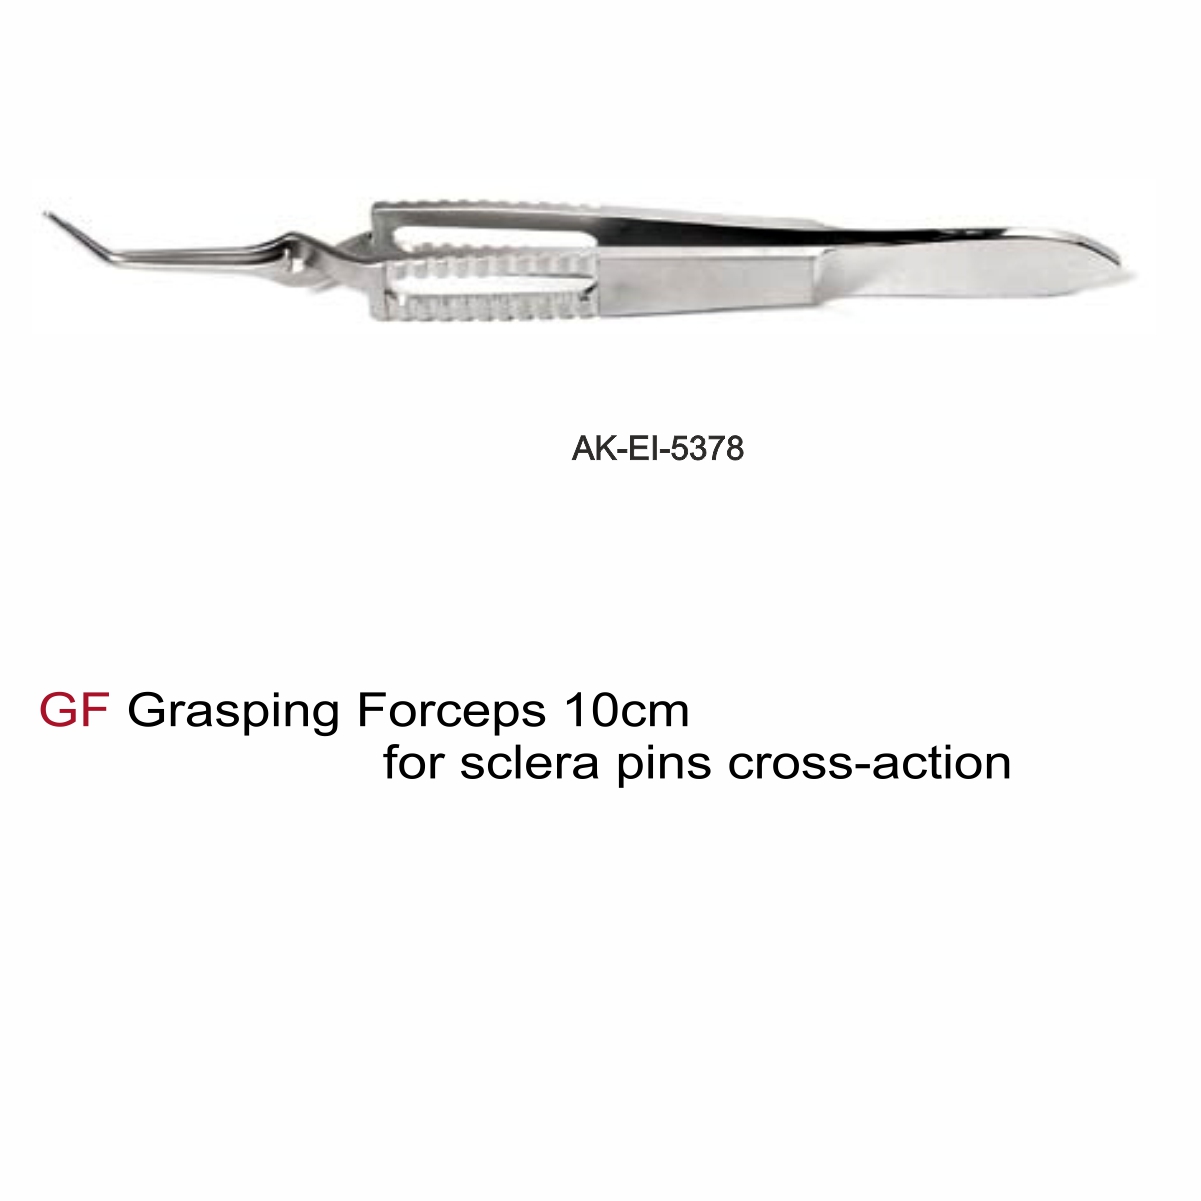 GF Grasping Forceps